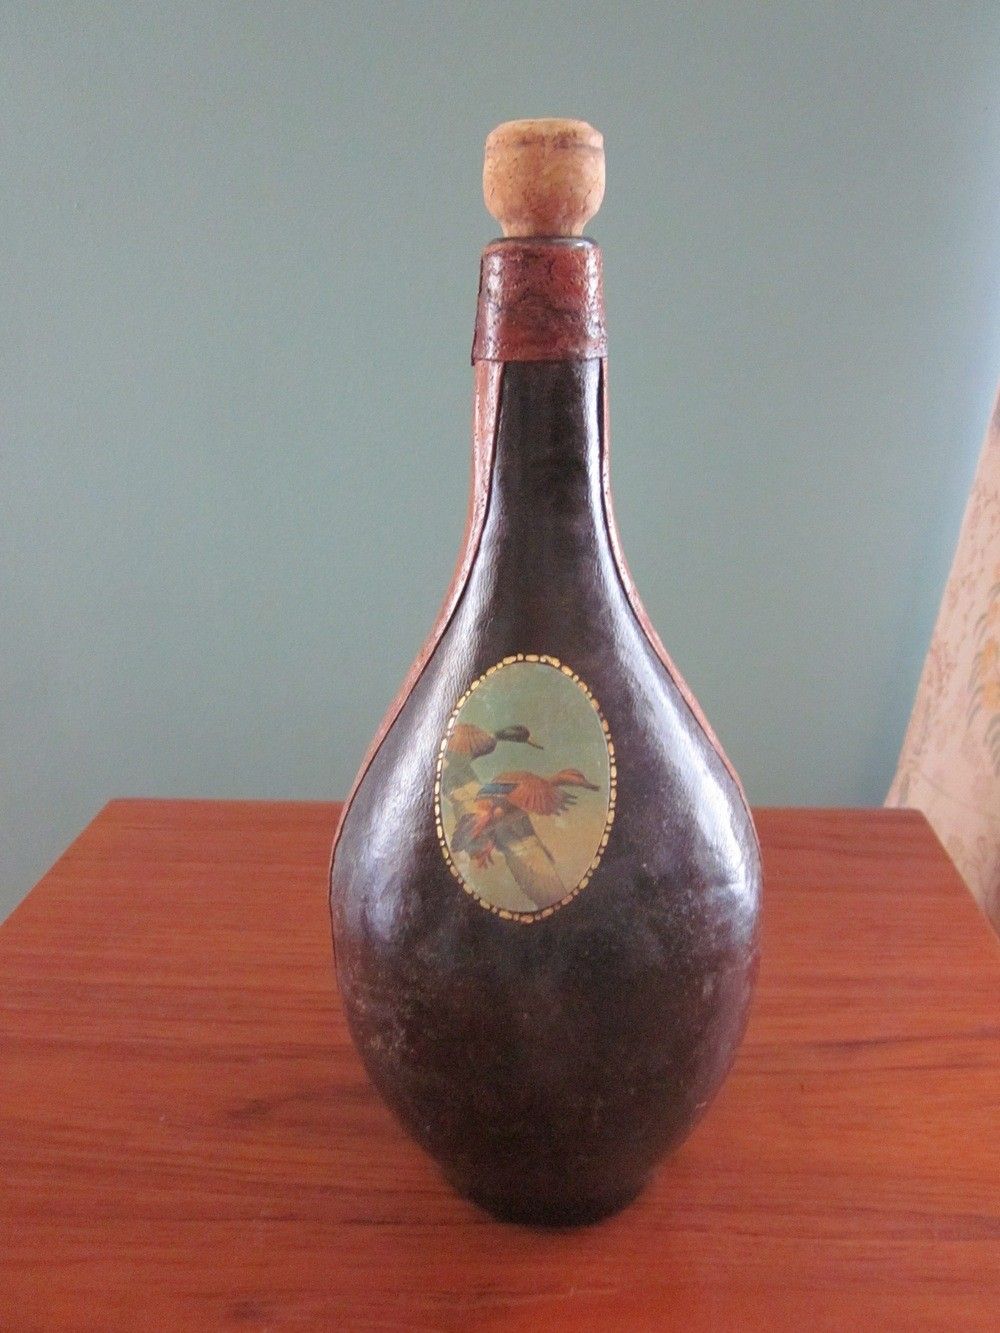 Italian Leather Wrapped Wine Bottle